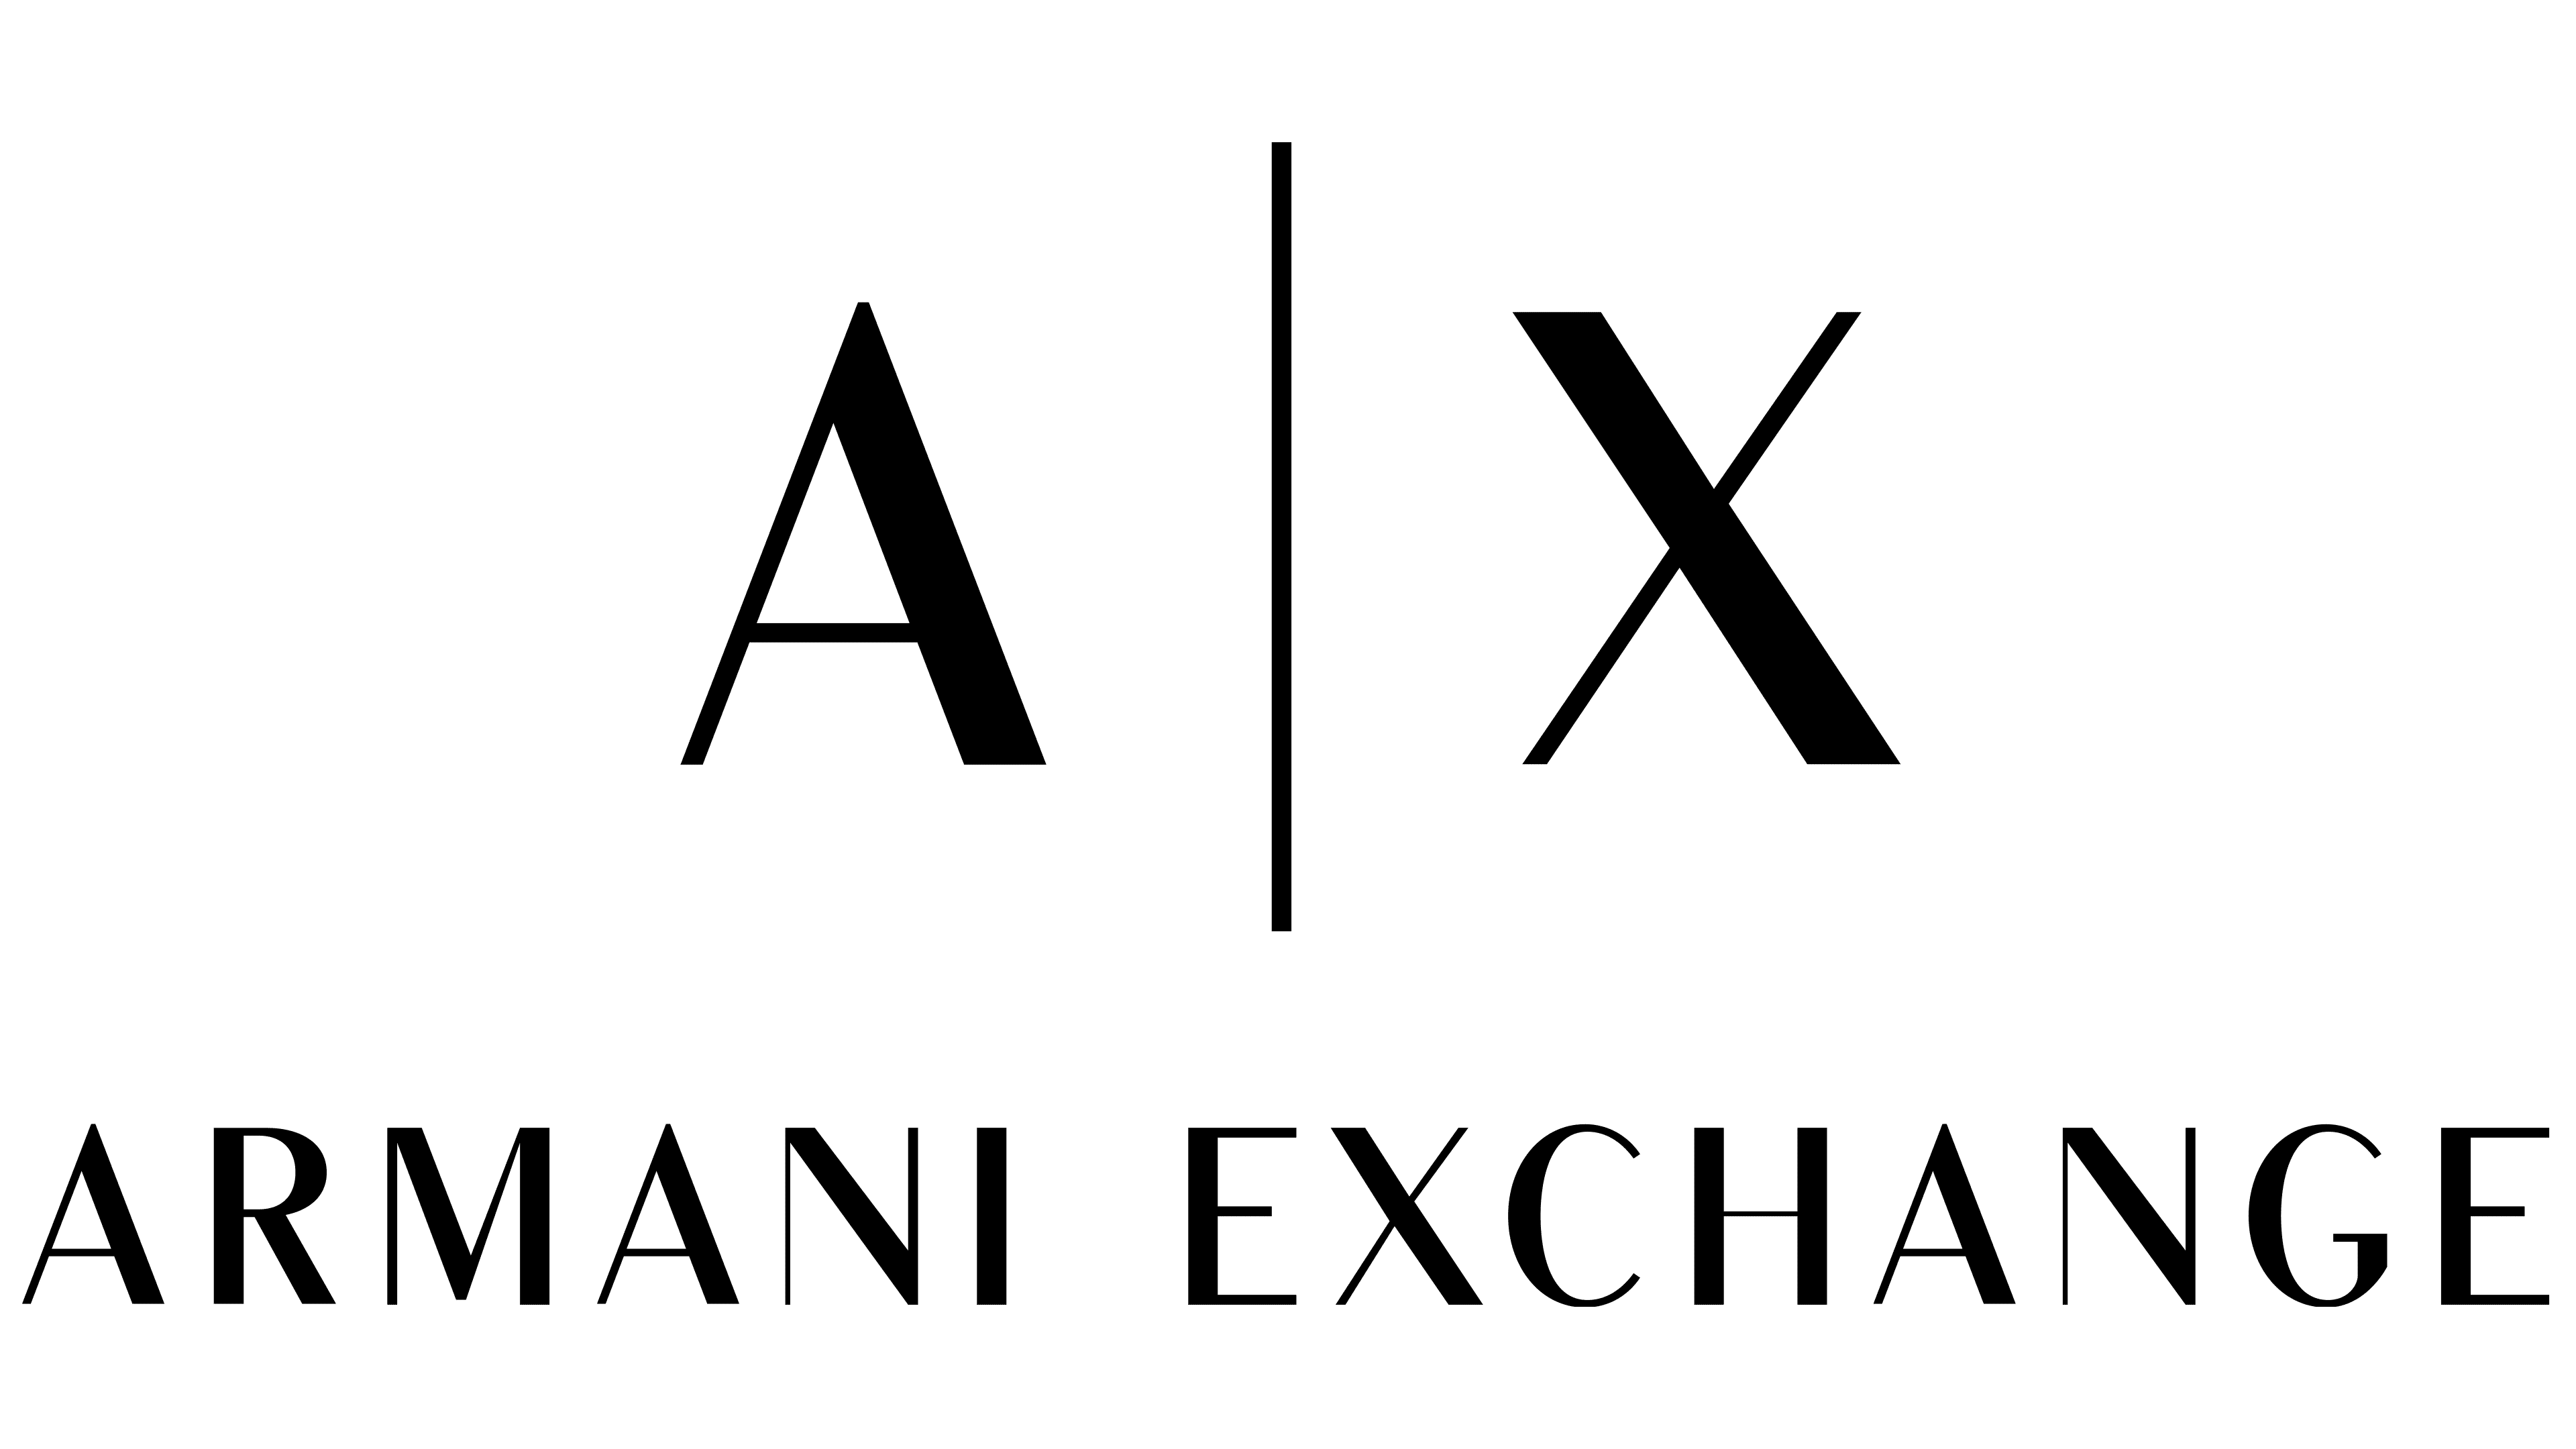 Armani exchange, Word mark logo, Armani wallpaper